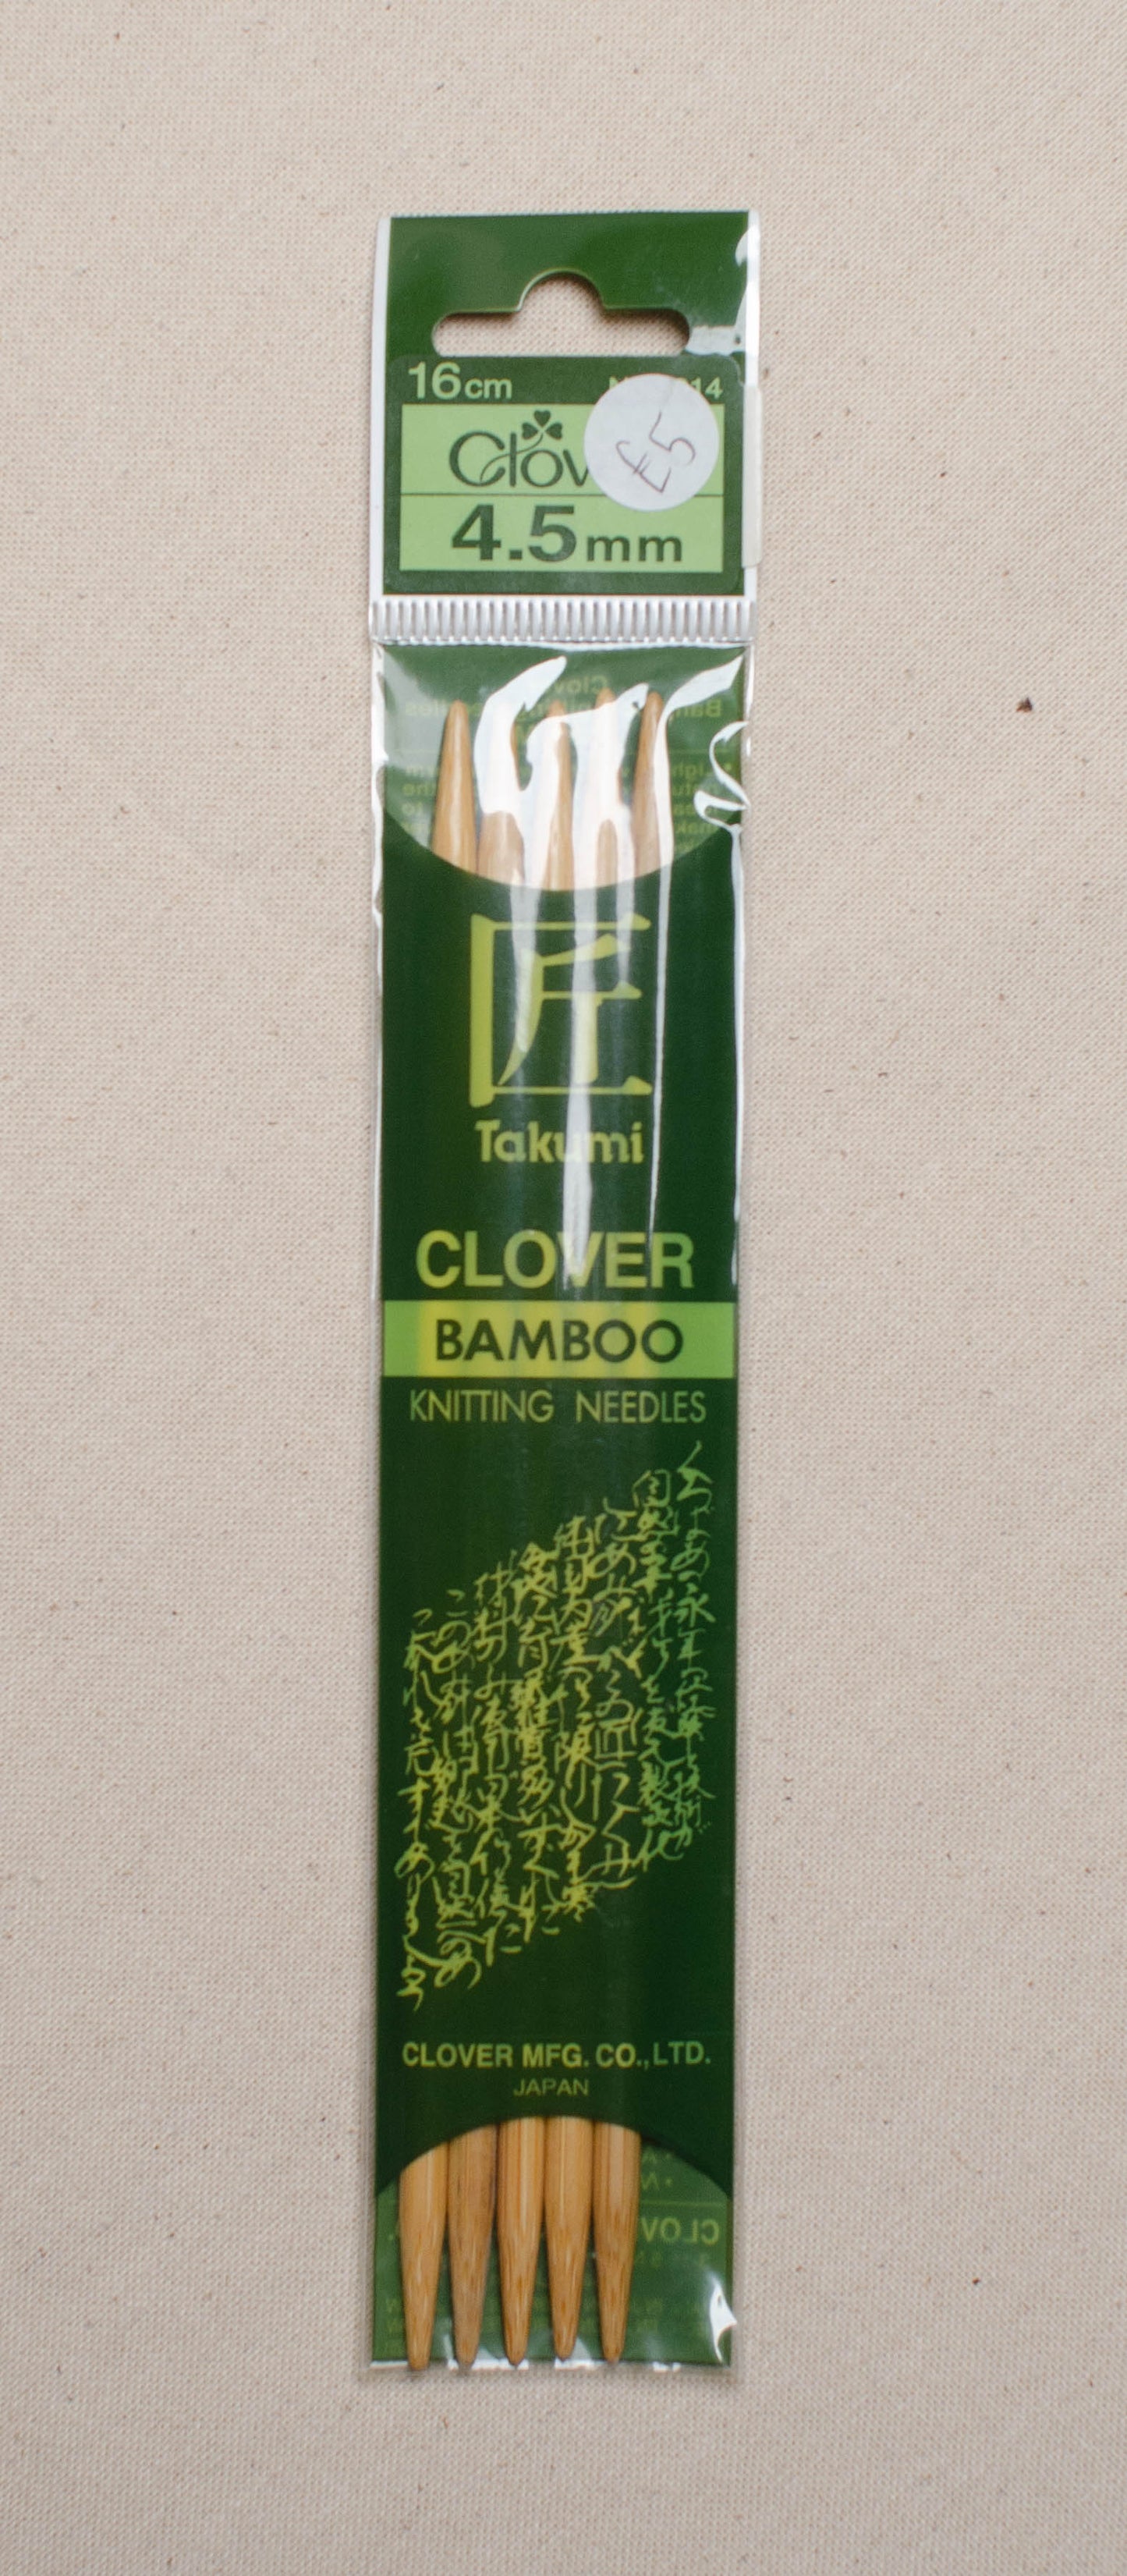 Clover 16cm Double Point Knitting Needles - 16cm X 4.5mm